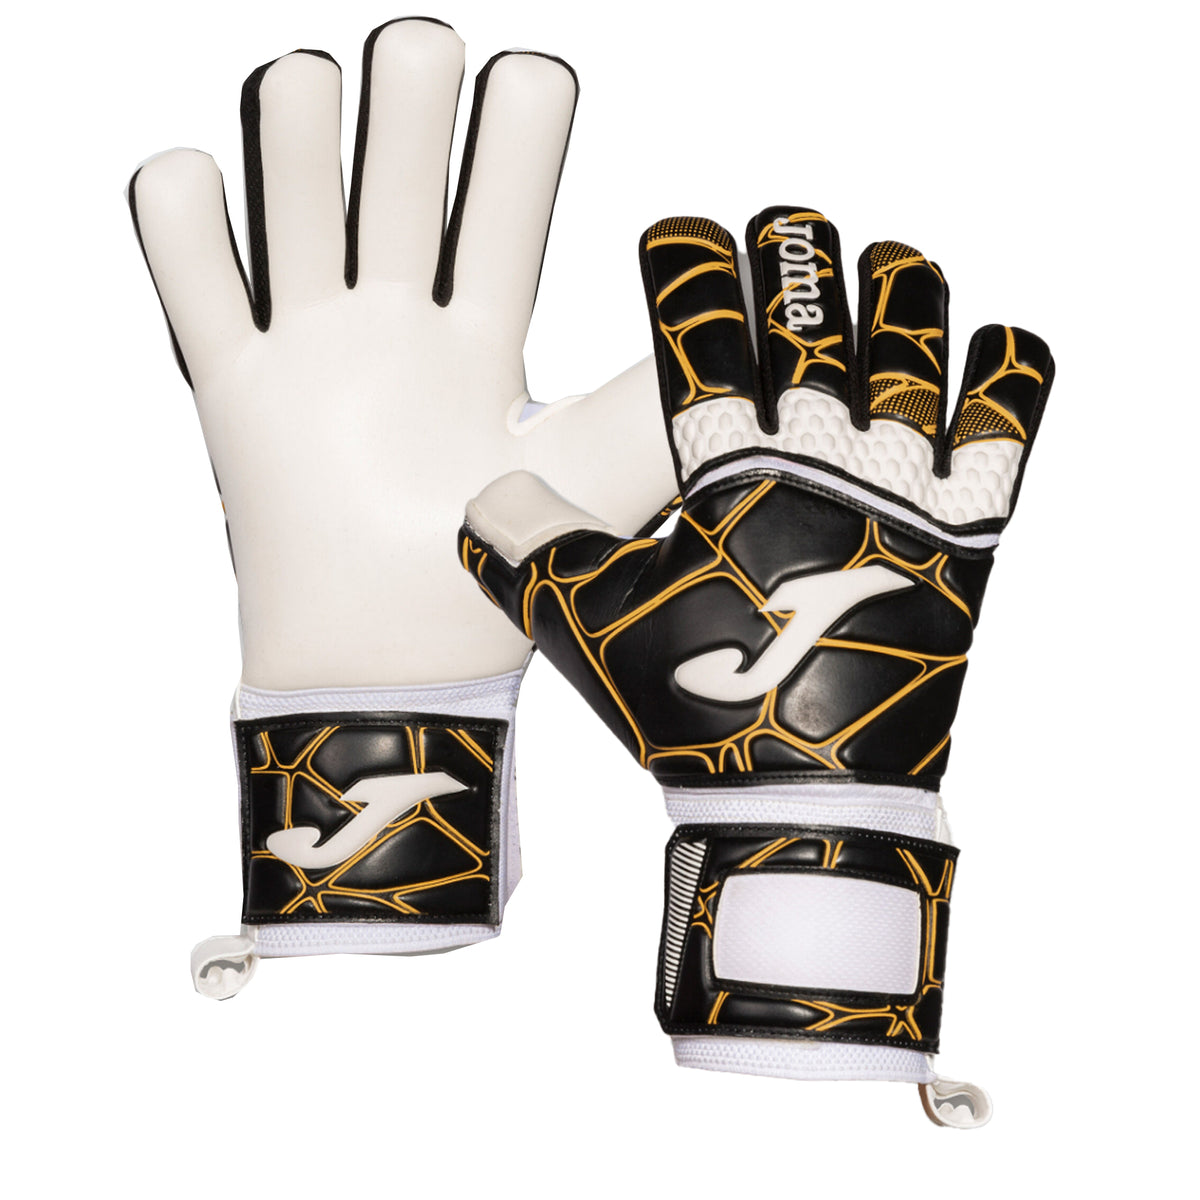 GK Gloves Joma Pro:Black Gold